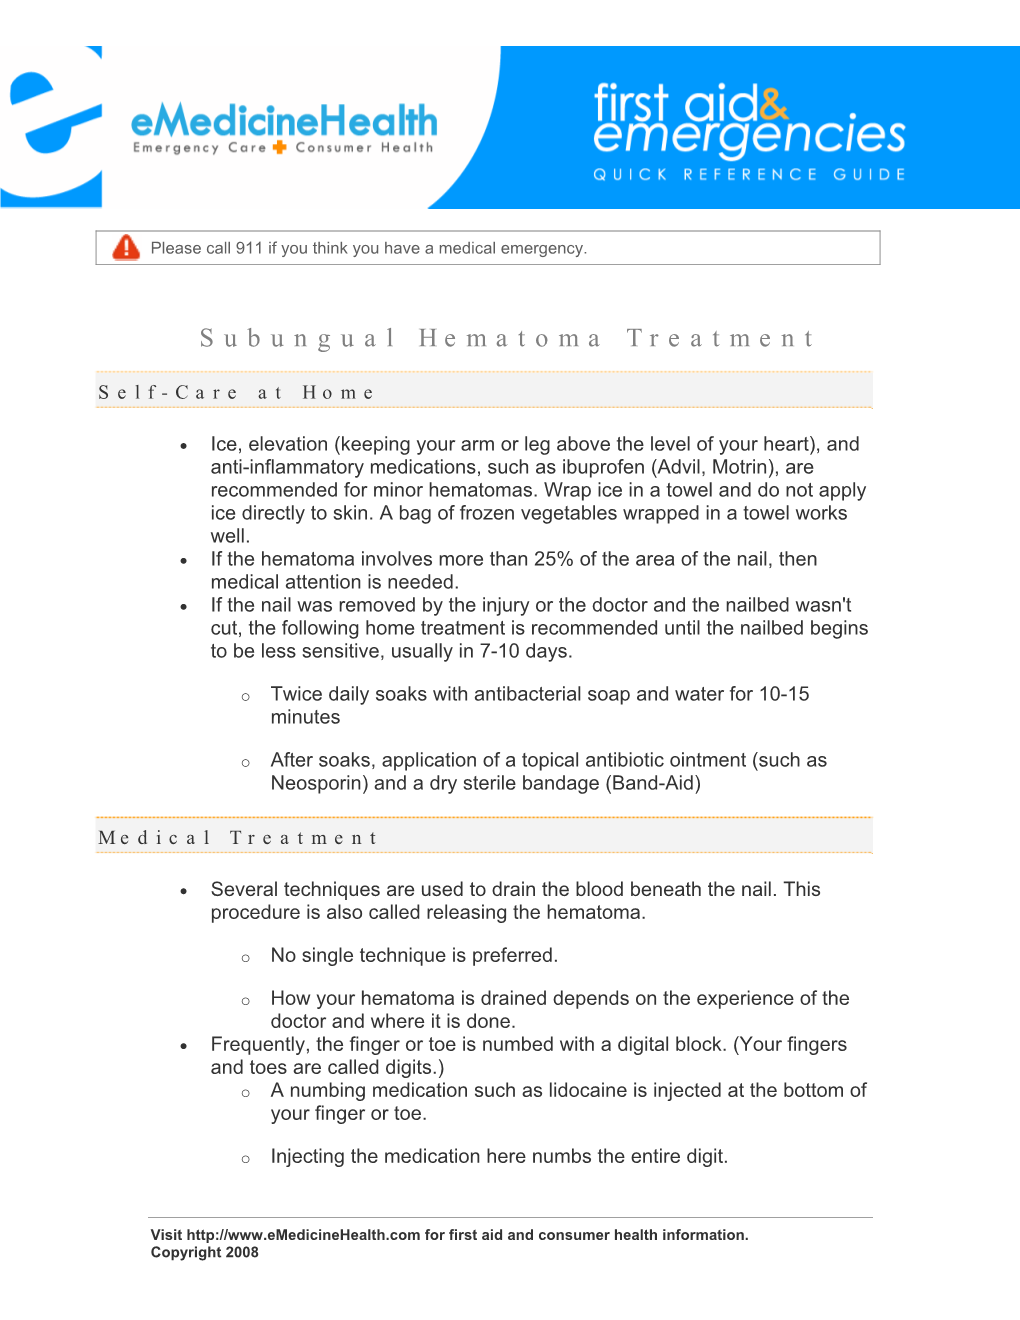 Subungual Hematoma Treatment